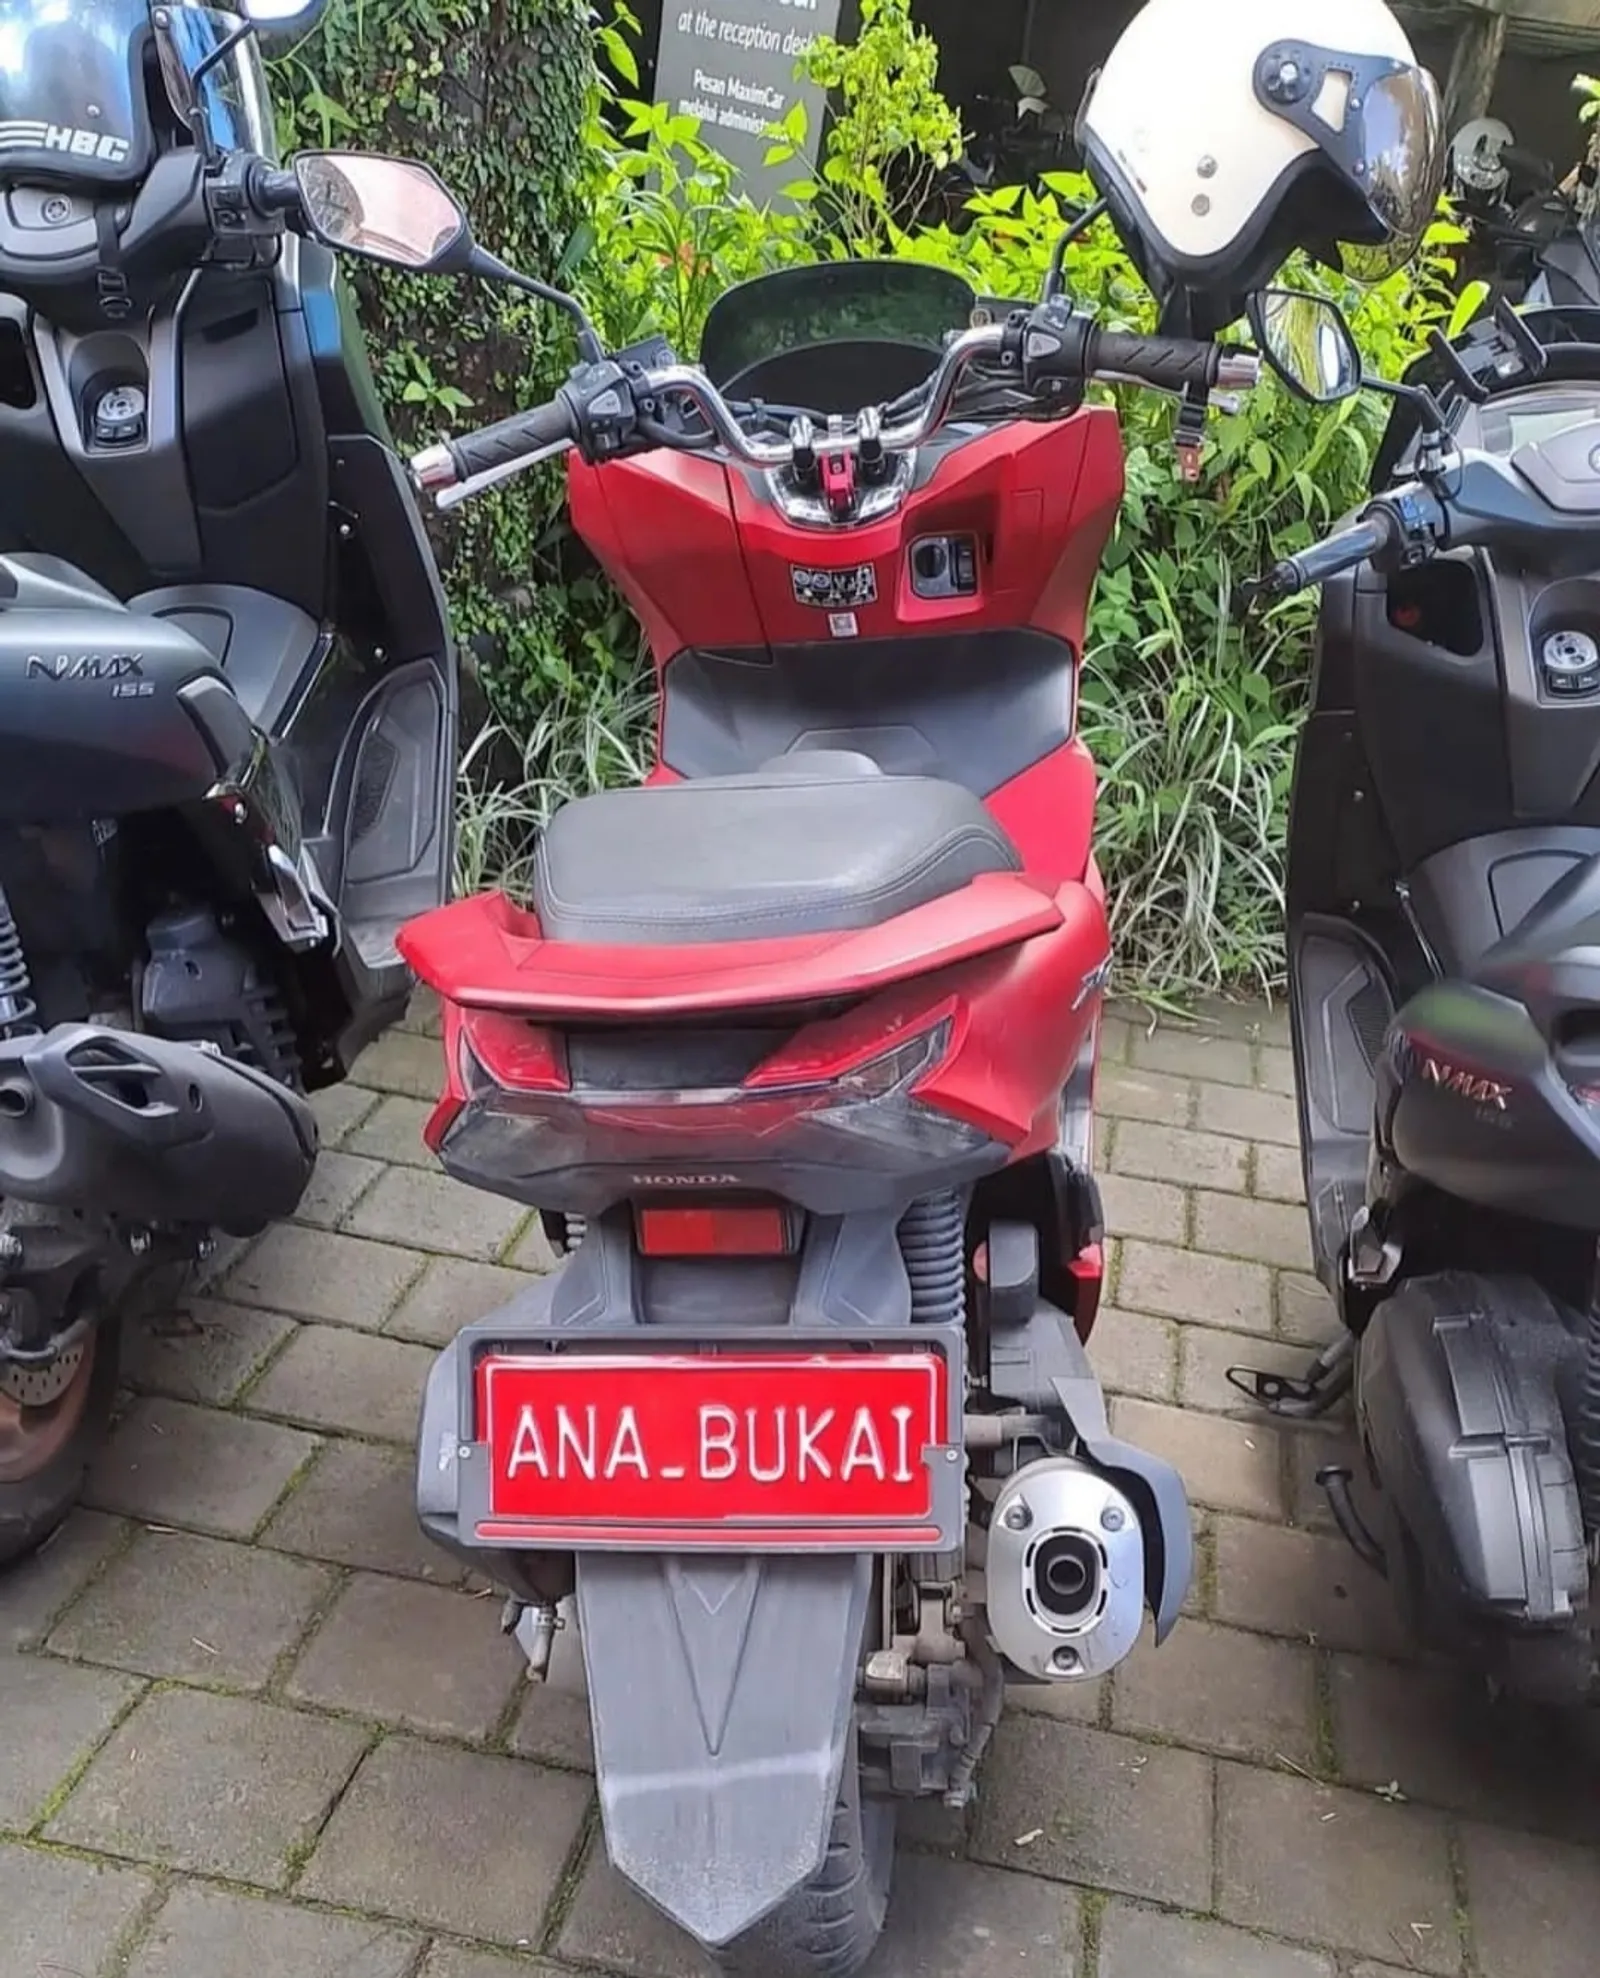 Viral Tren Bule di Bali Pakai Pelat Nomor Palsu, Ini Ancaman Pidananya